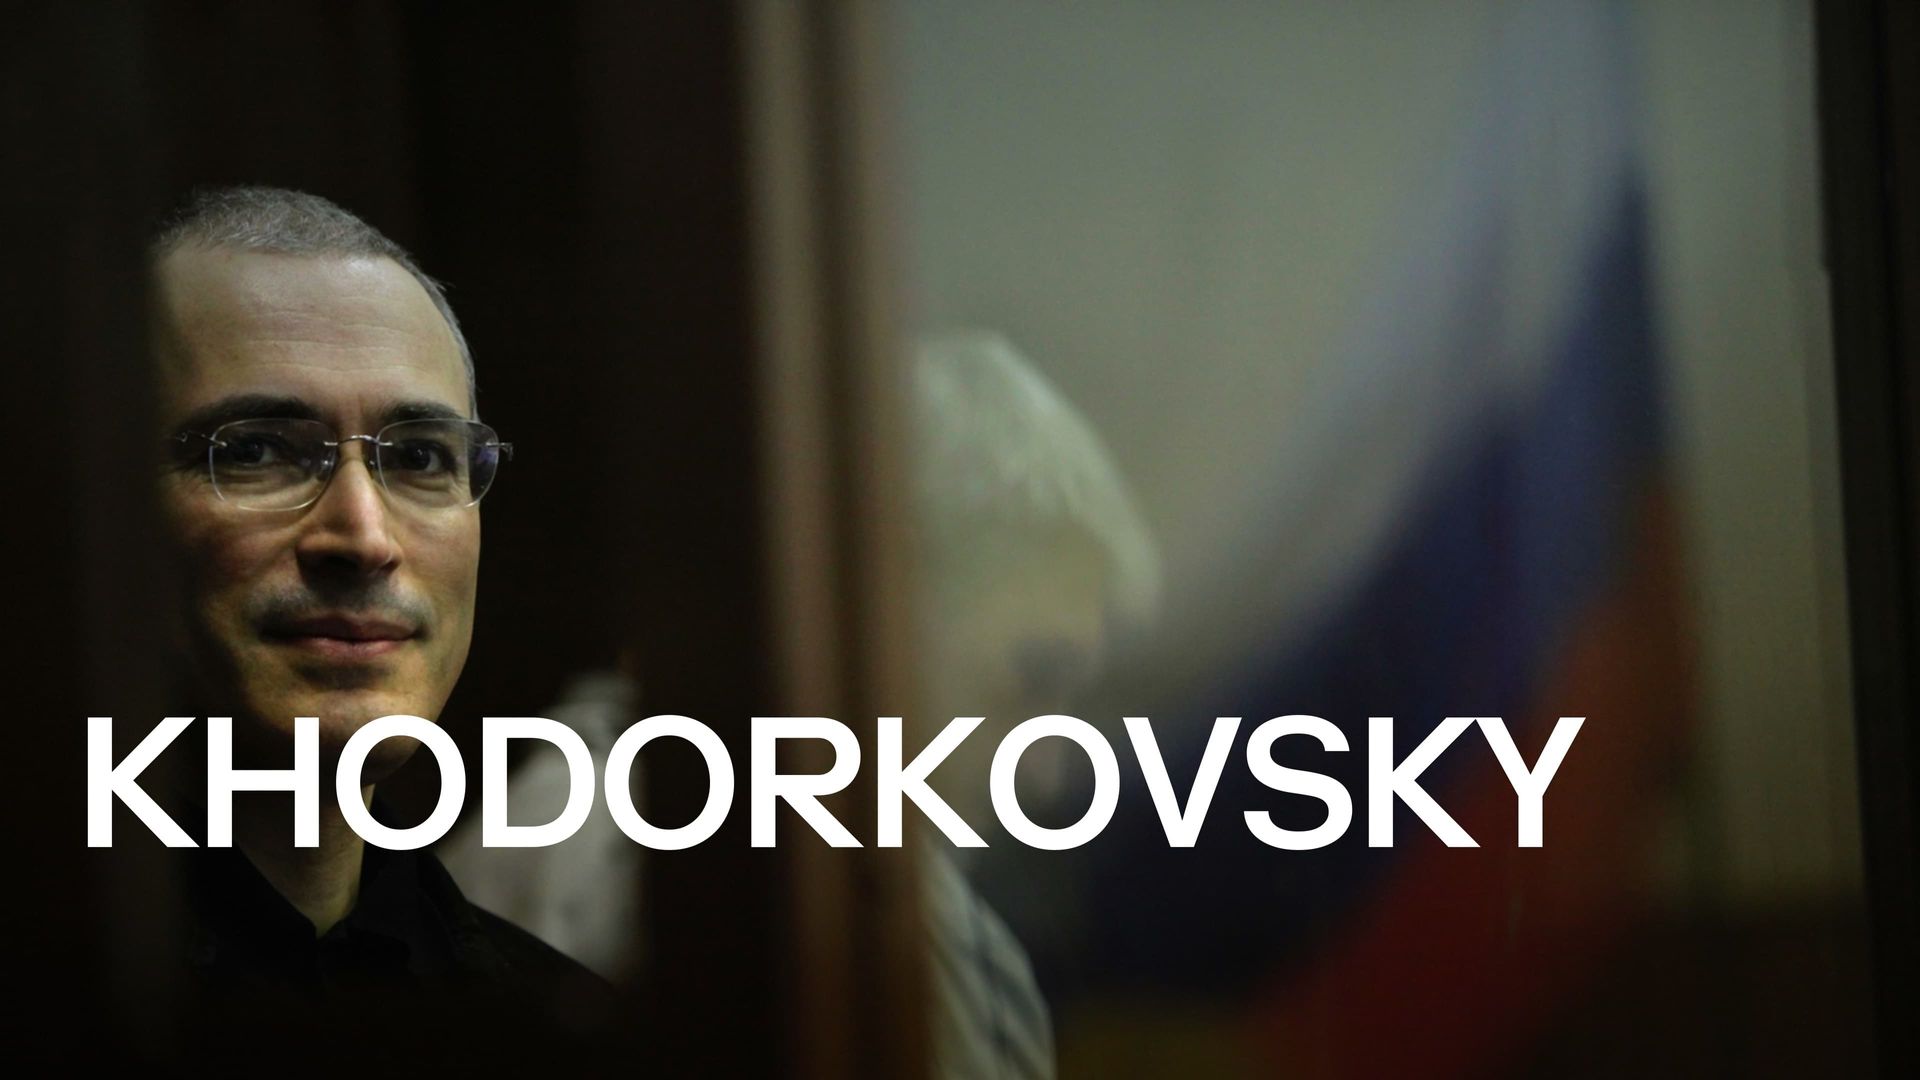 Khodorkovsky background